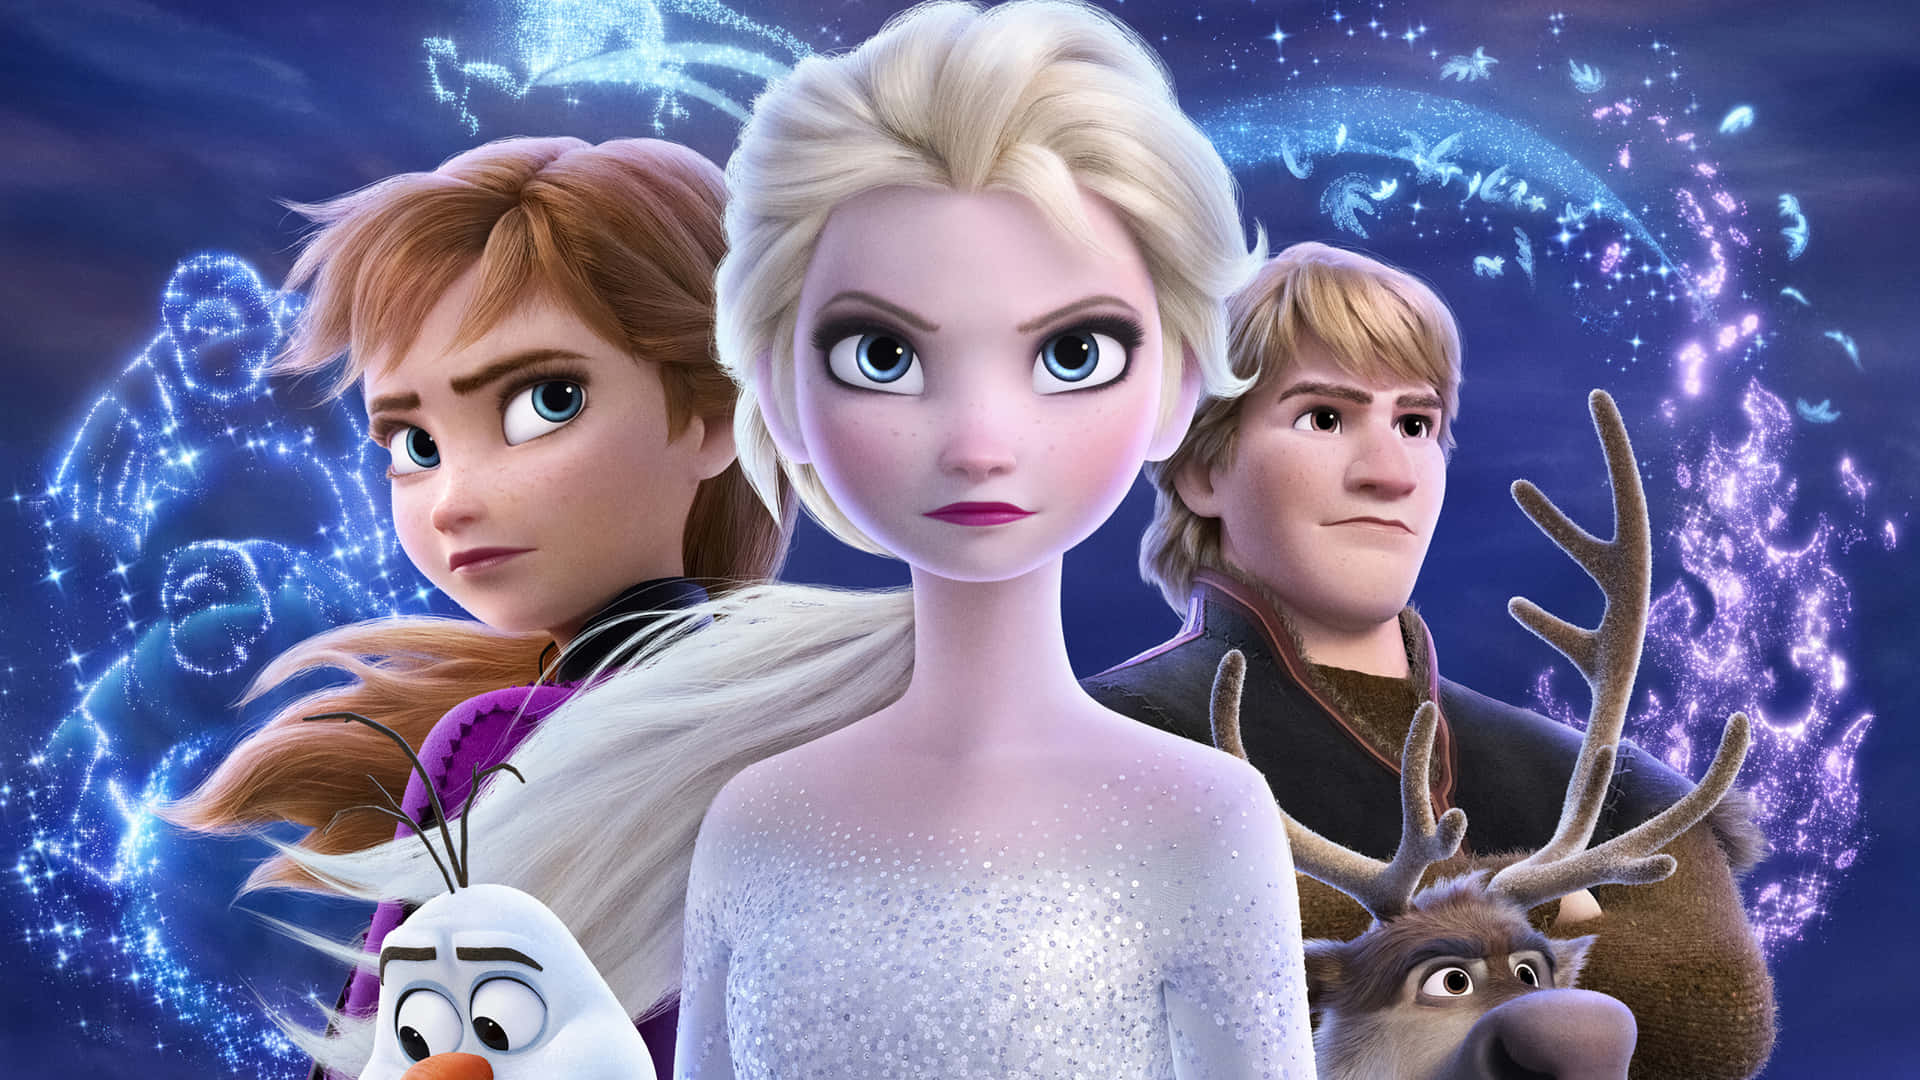 Frozen Characters 1440p Disney Background